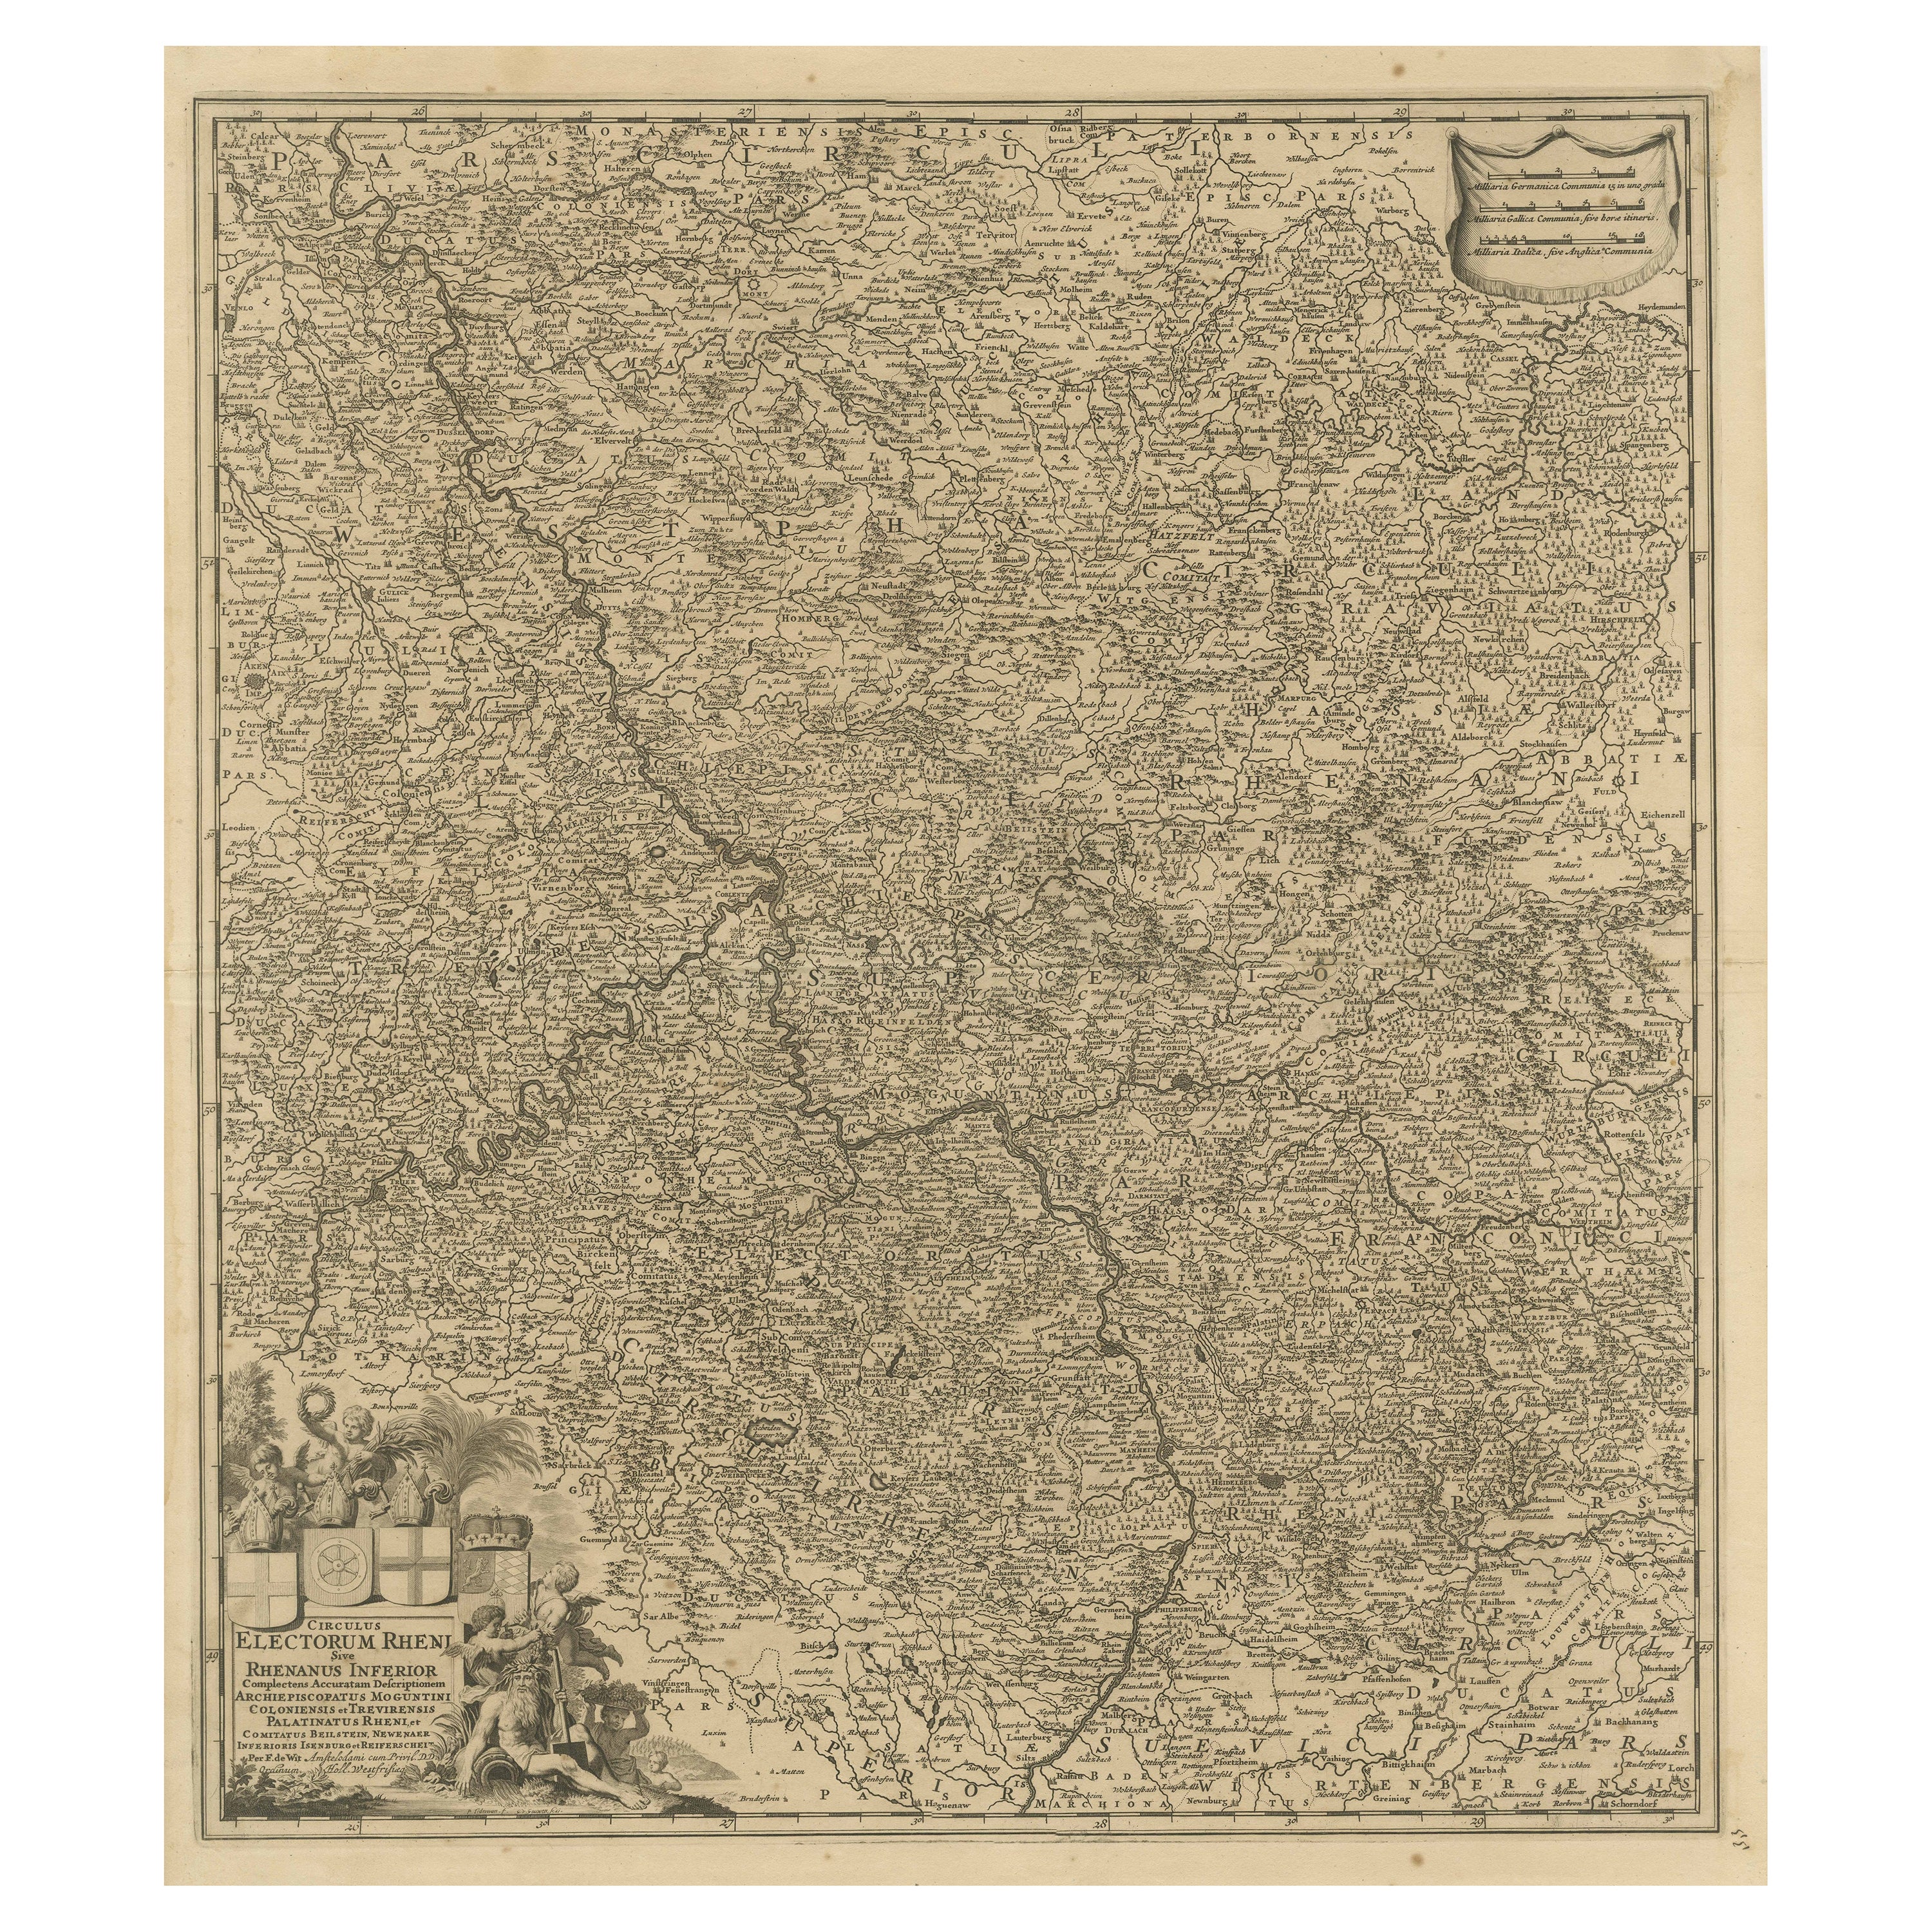 Antique Map of the Niederrhein region, Germany